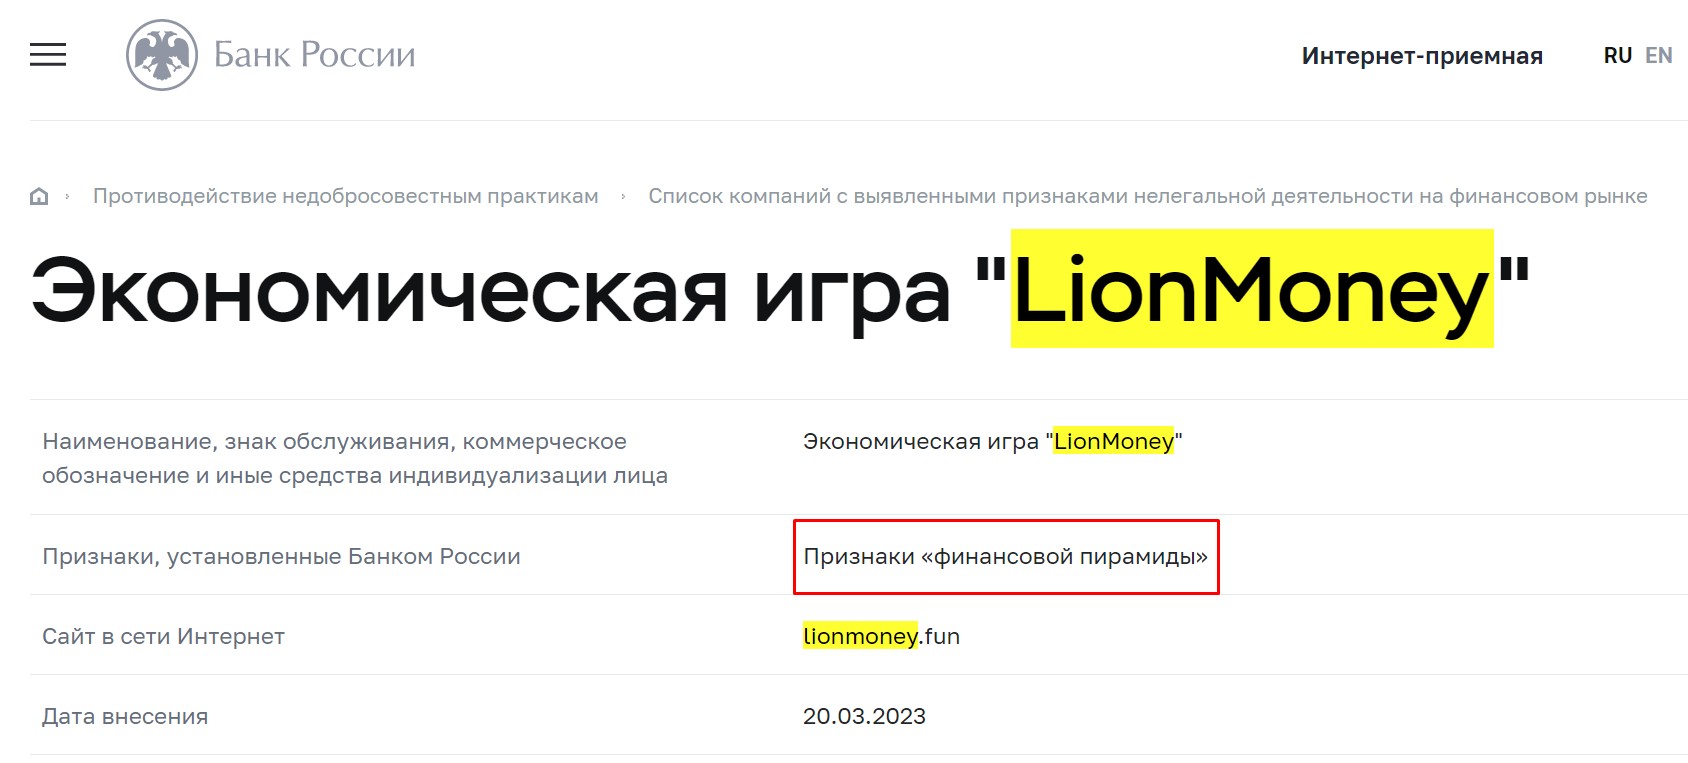 обзор проекта lionmoney fun